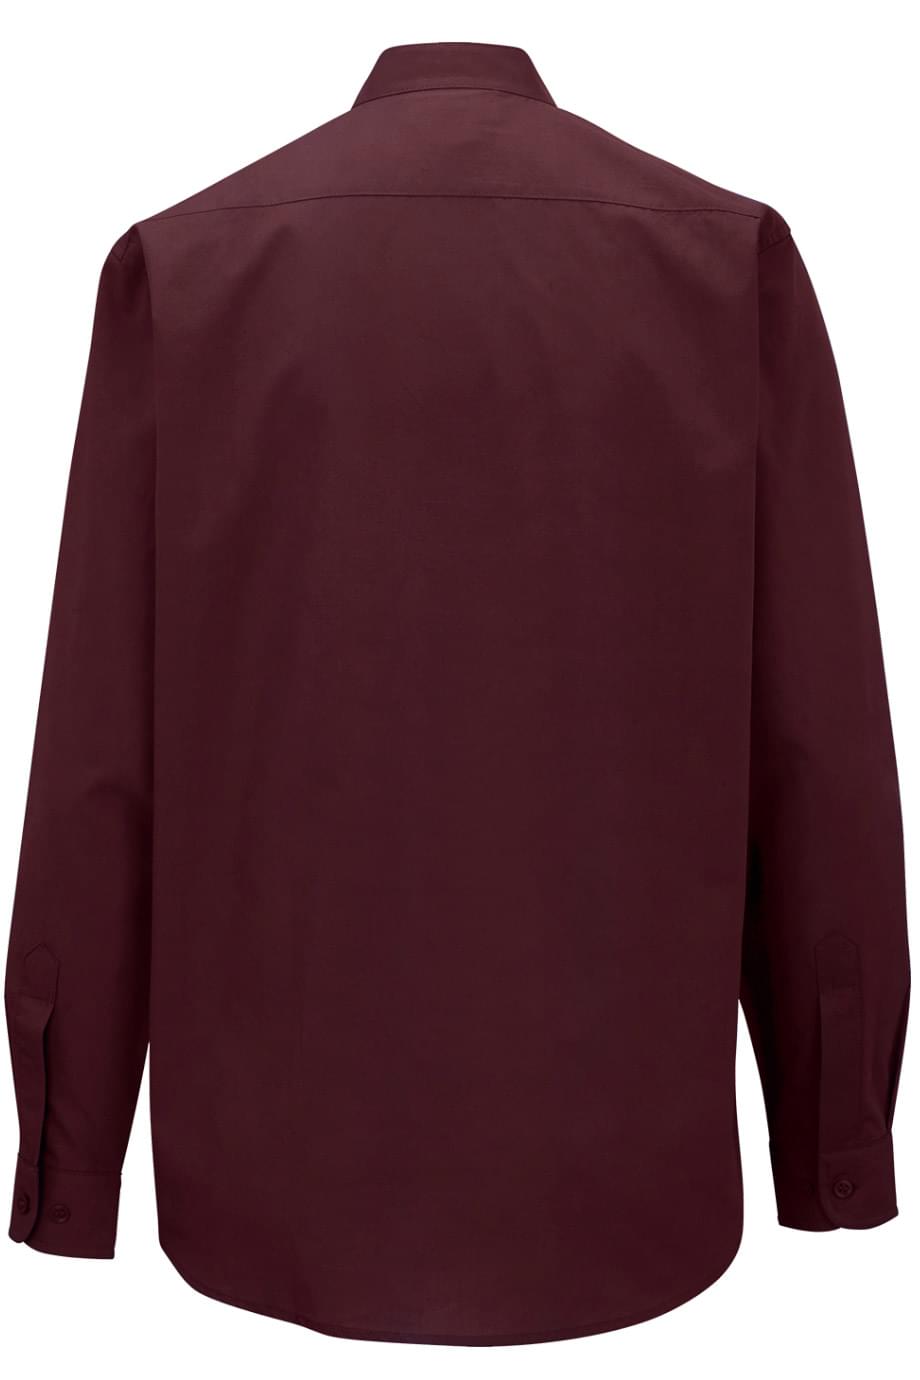 Women's Banded Collar Long-Sleeve Shirt, Burgundy [Left Chest / VCL All White]